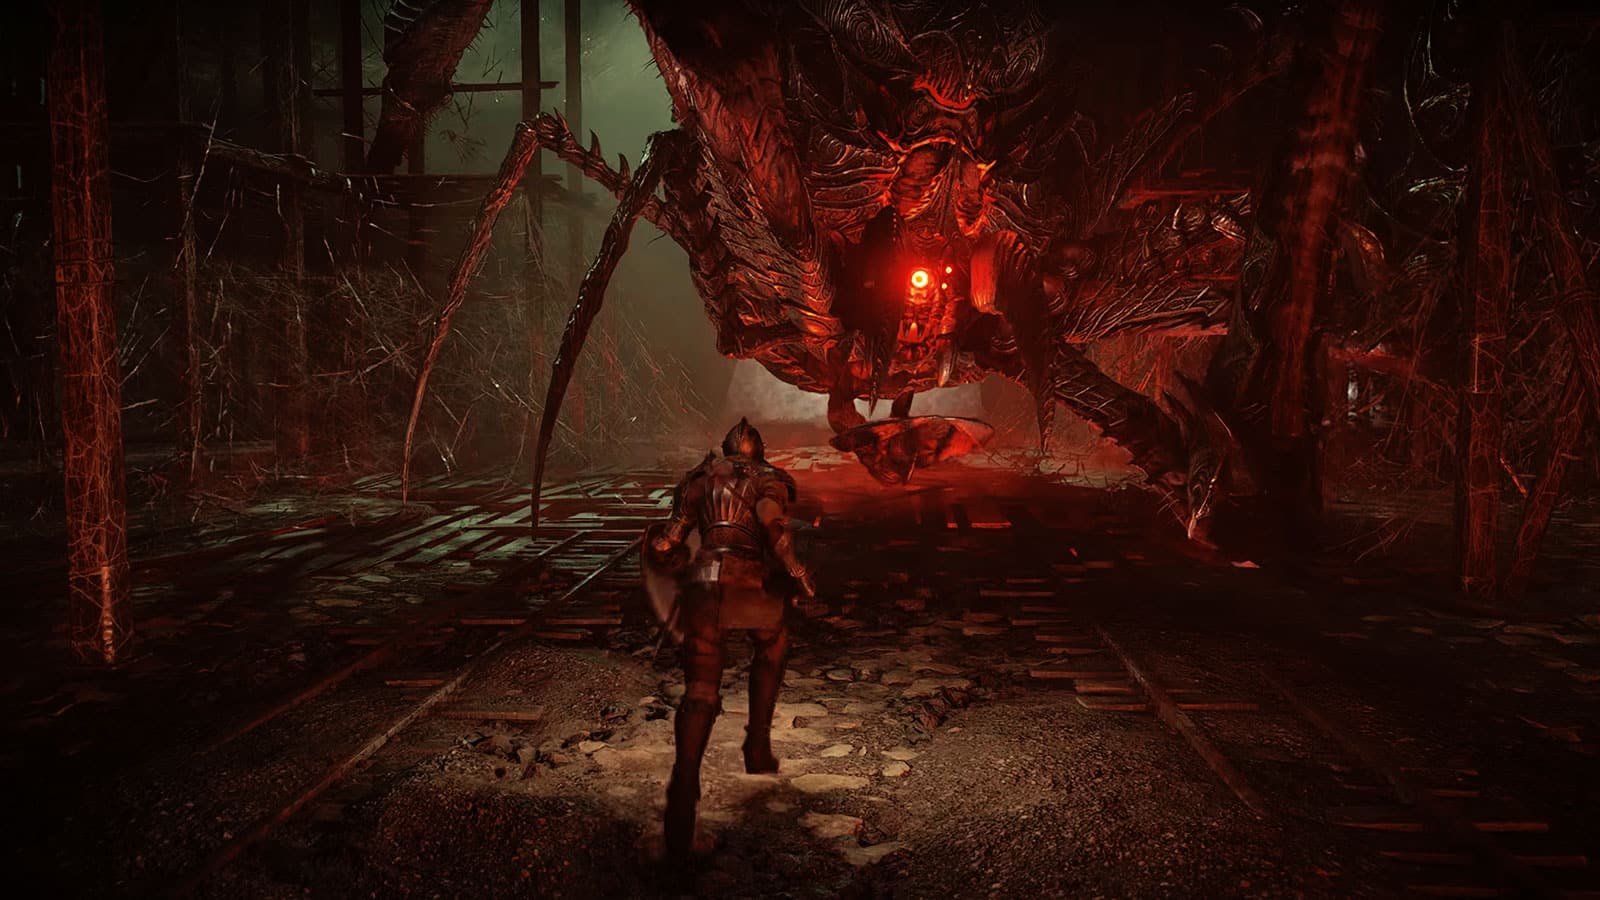 Demon's Souls - Gameplay Trailer